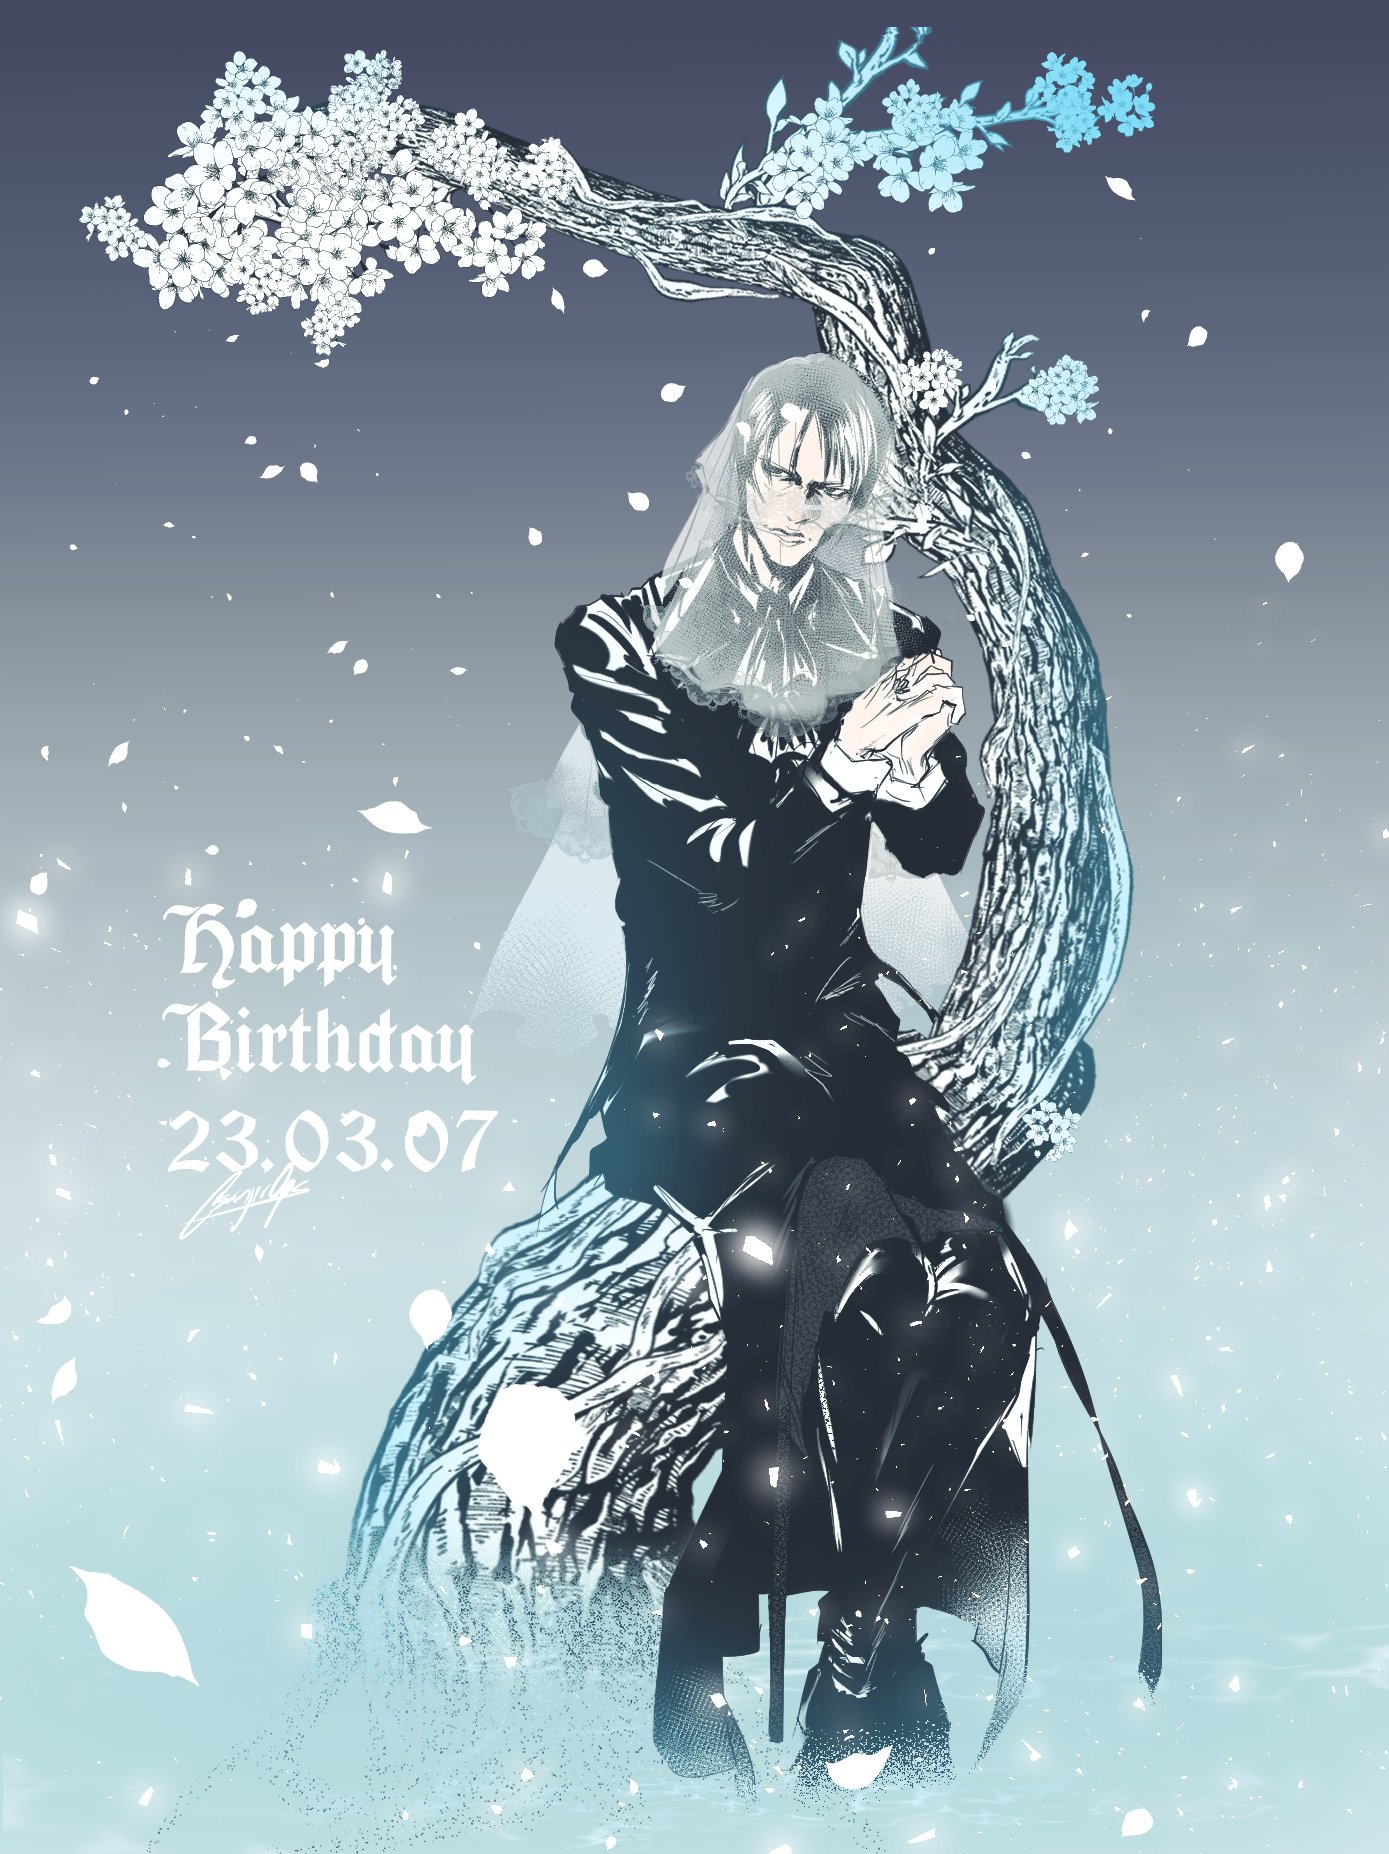 sakurai's bday 2023. this was featured on the official FISH TANK sakurai's birthday image event <3